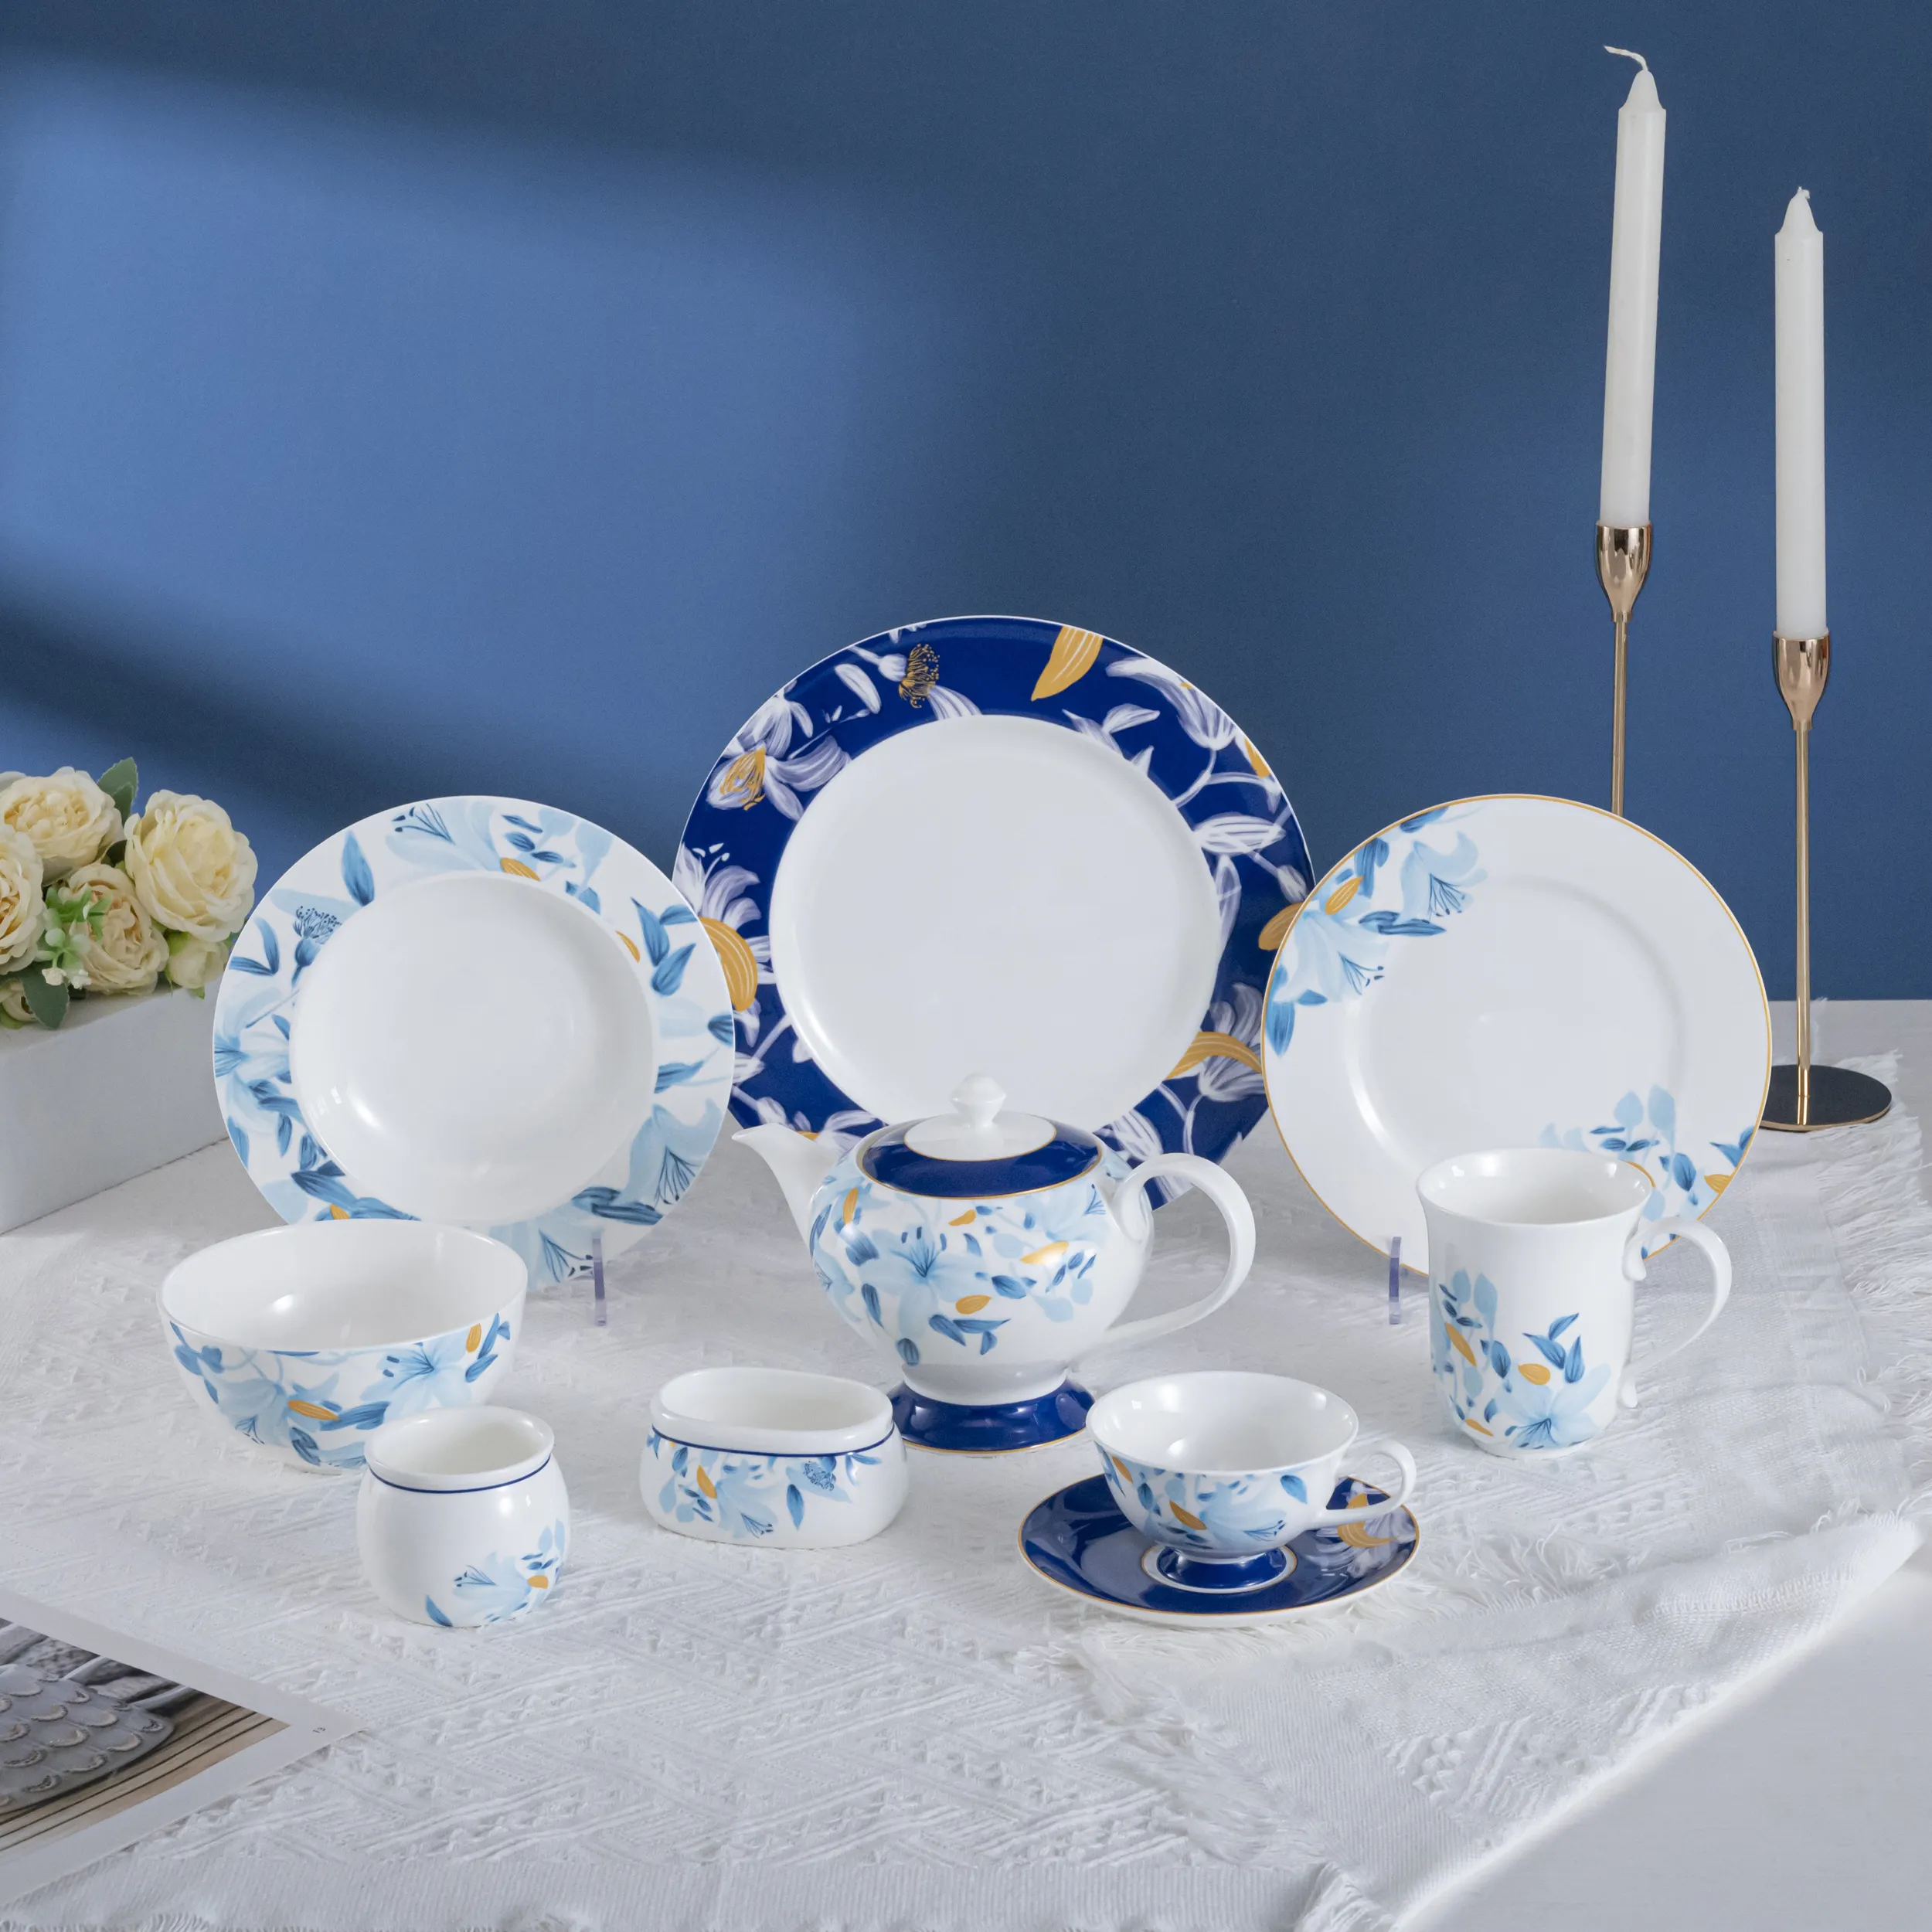 PITO Modern European Style Ceramic Bone China Tableware Set Restaurant Hotel Porcelain Dinnerware Set